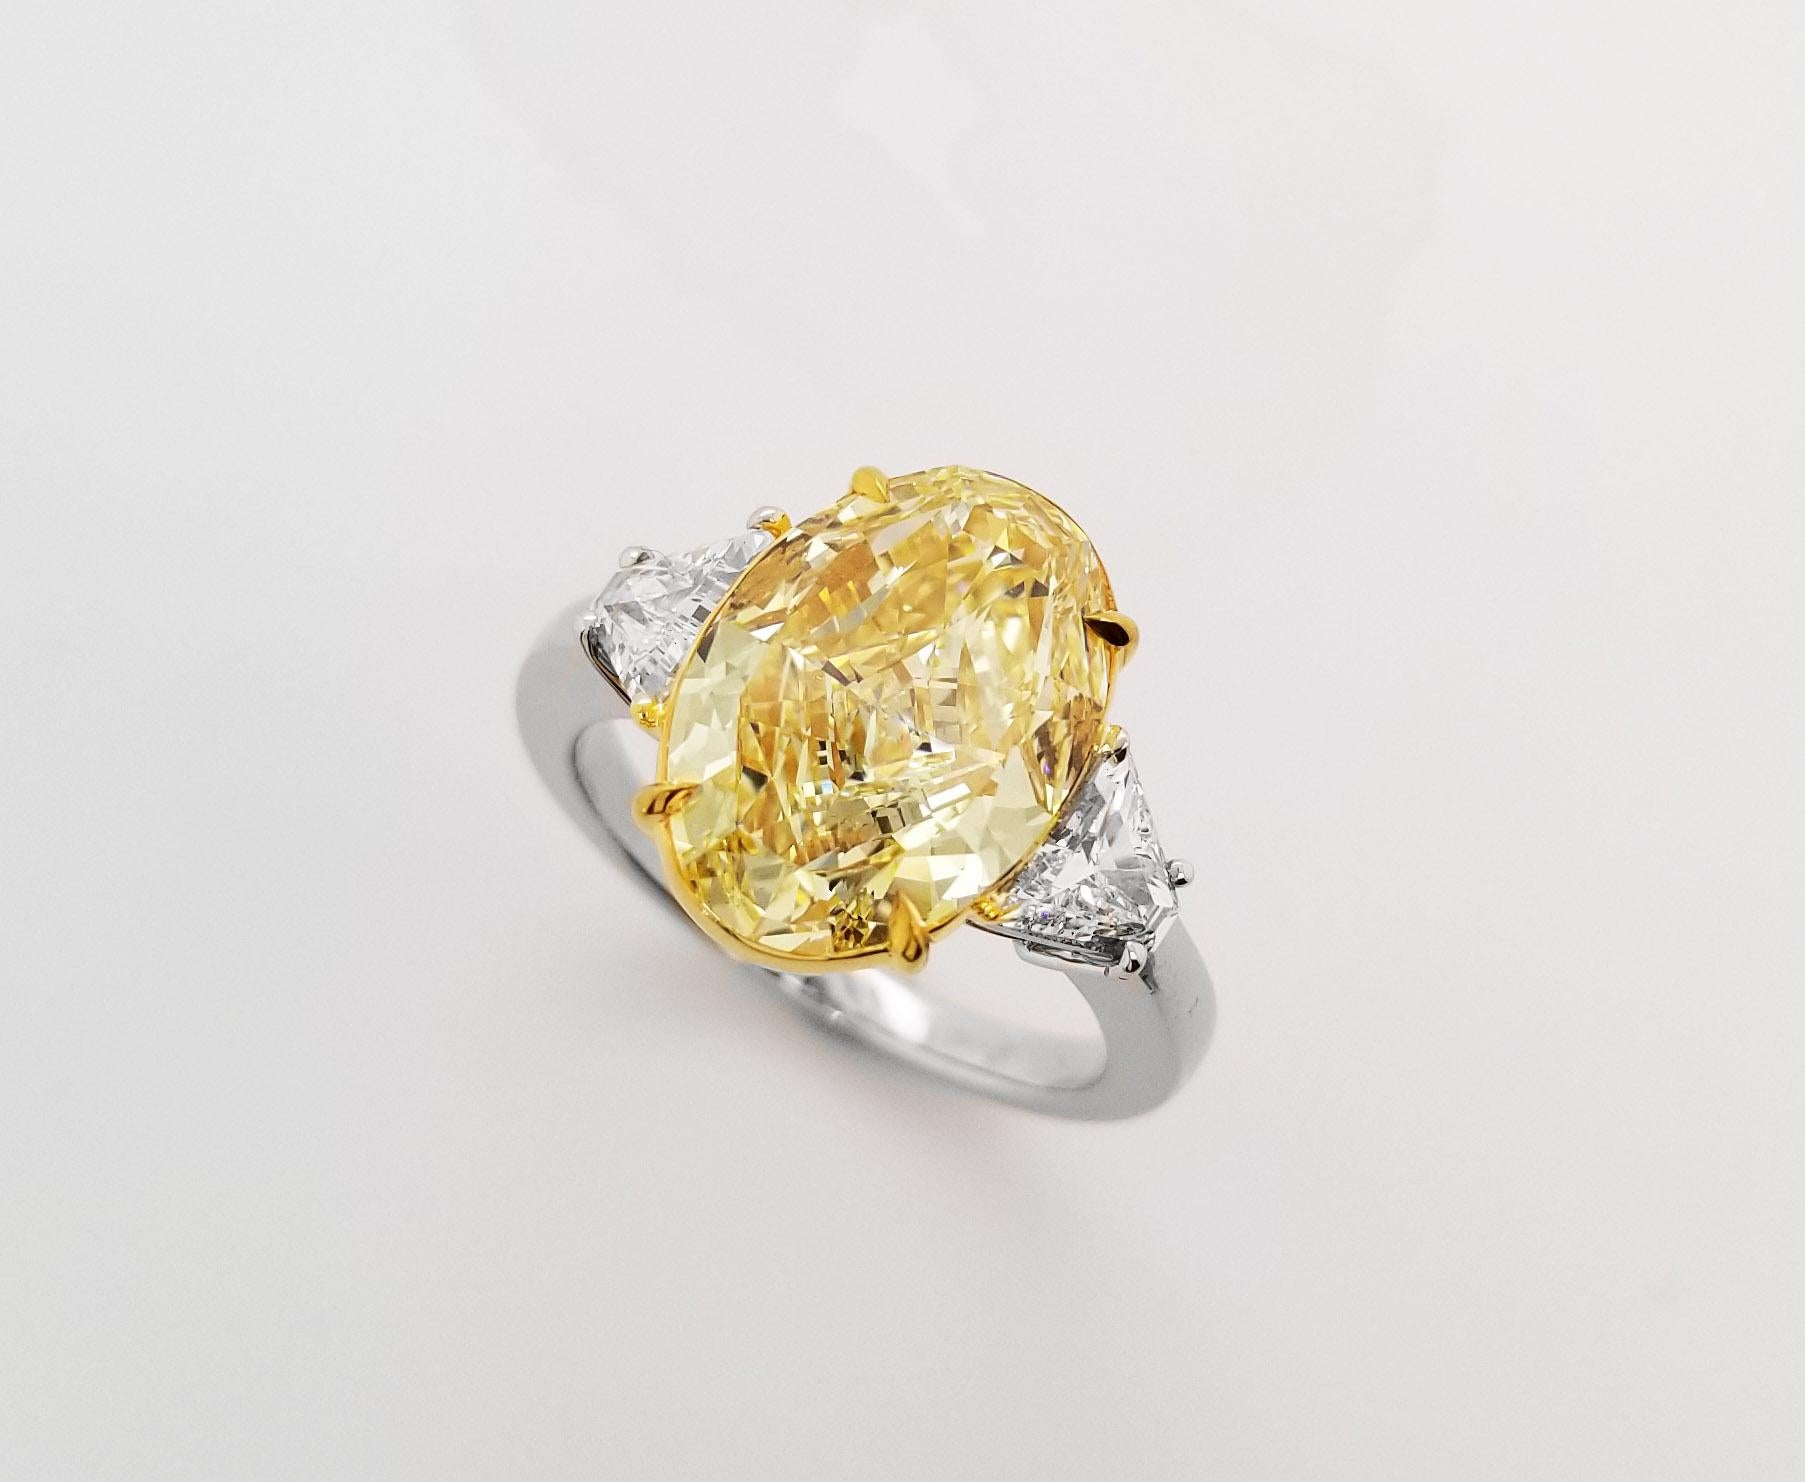 Oval Cut Scarselli 5 Carat Fancy Yellow Diamond Ring in Platinum & 18k